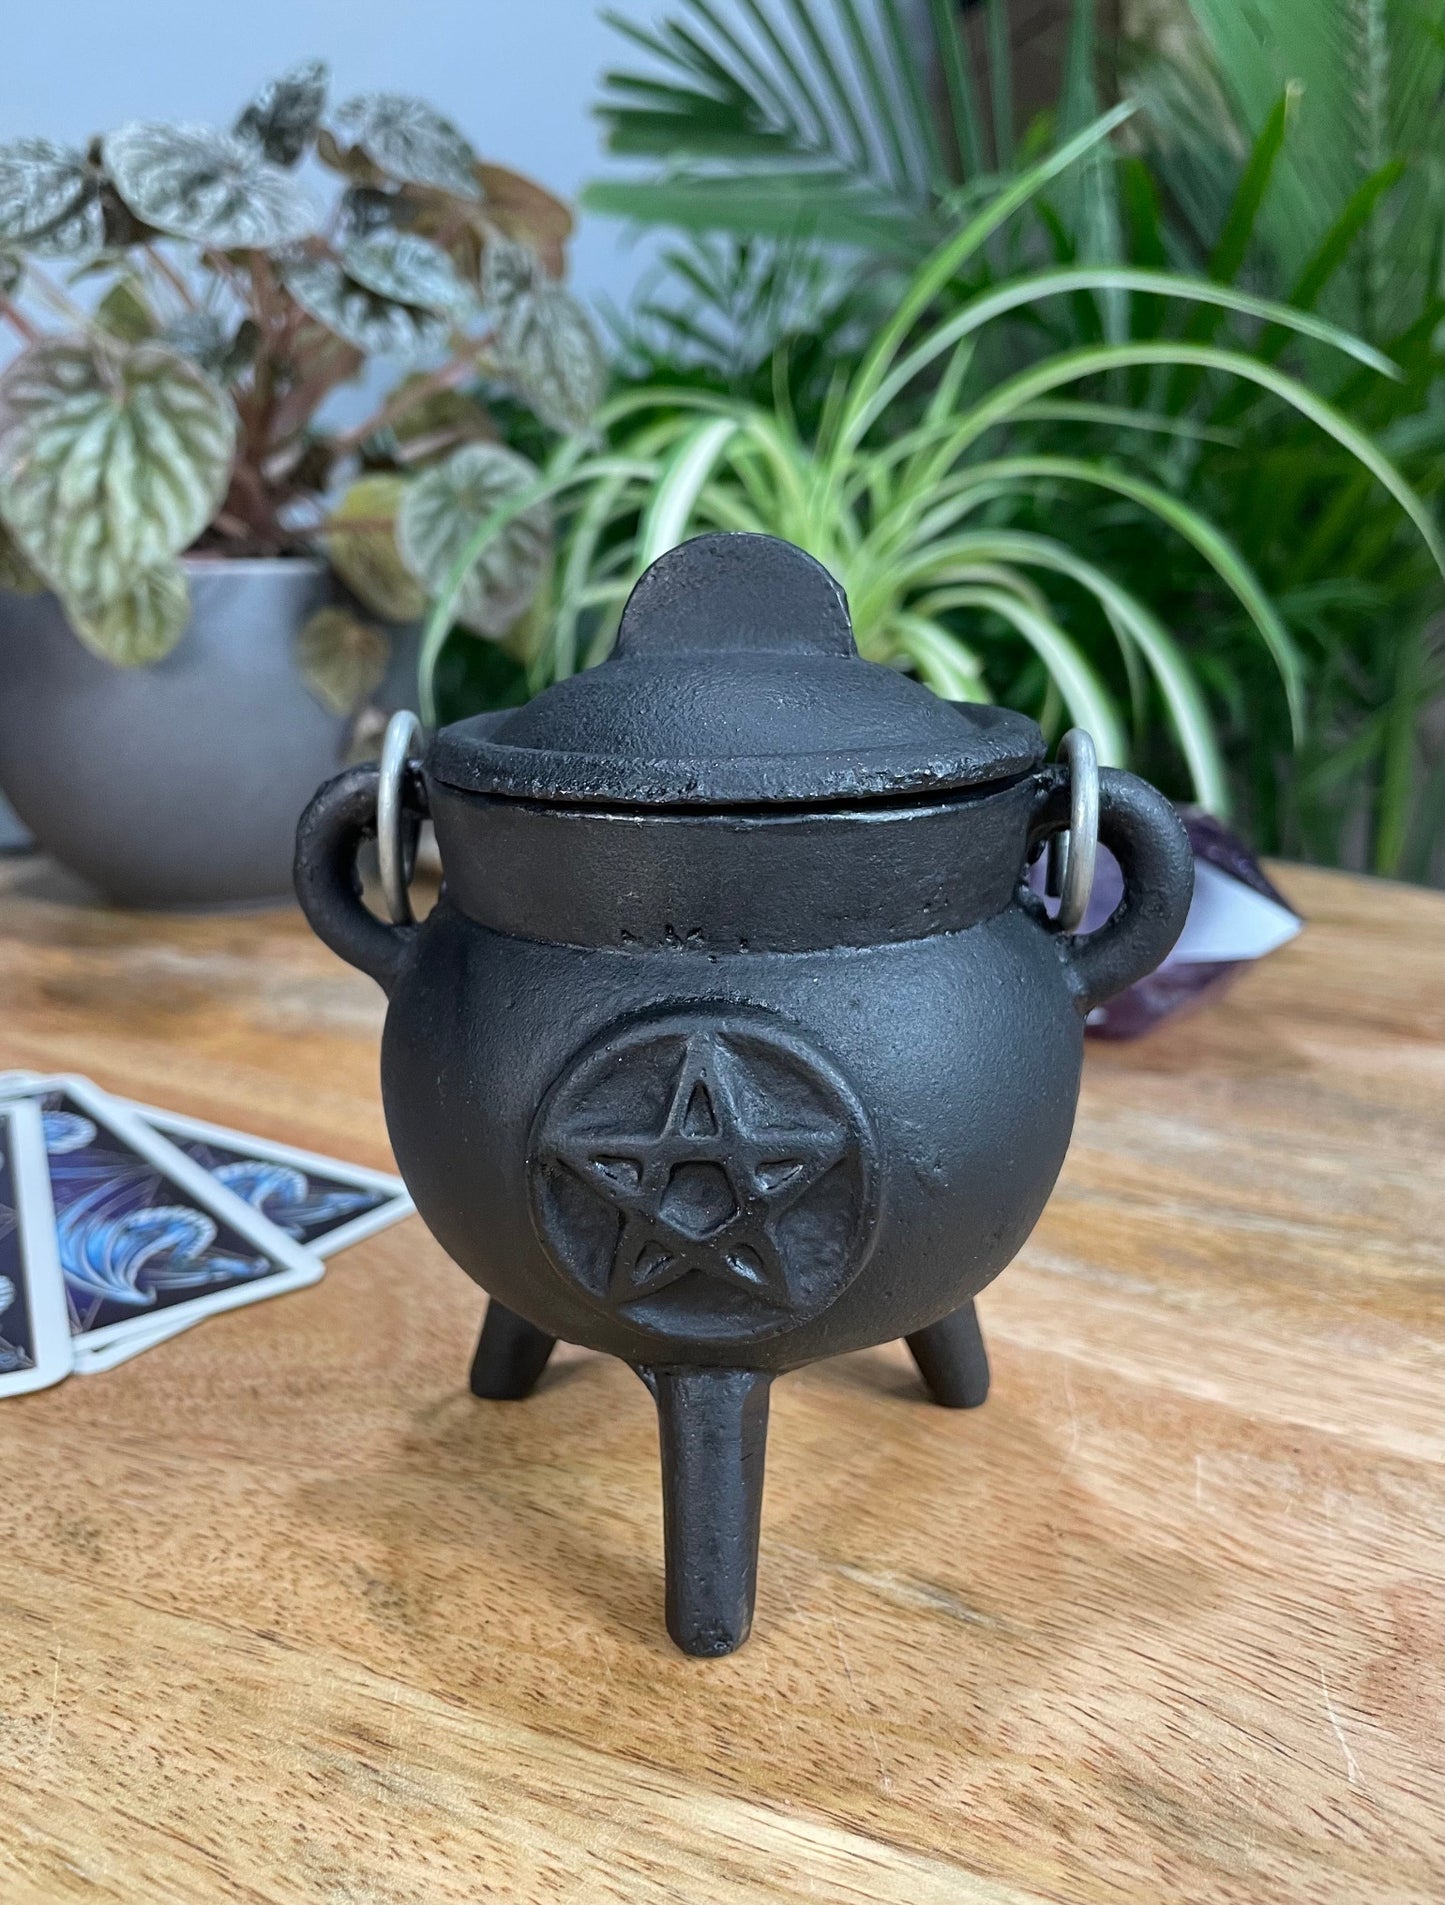 Pictured is a mini pentacle cast iron cauldron.